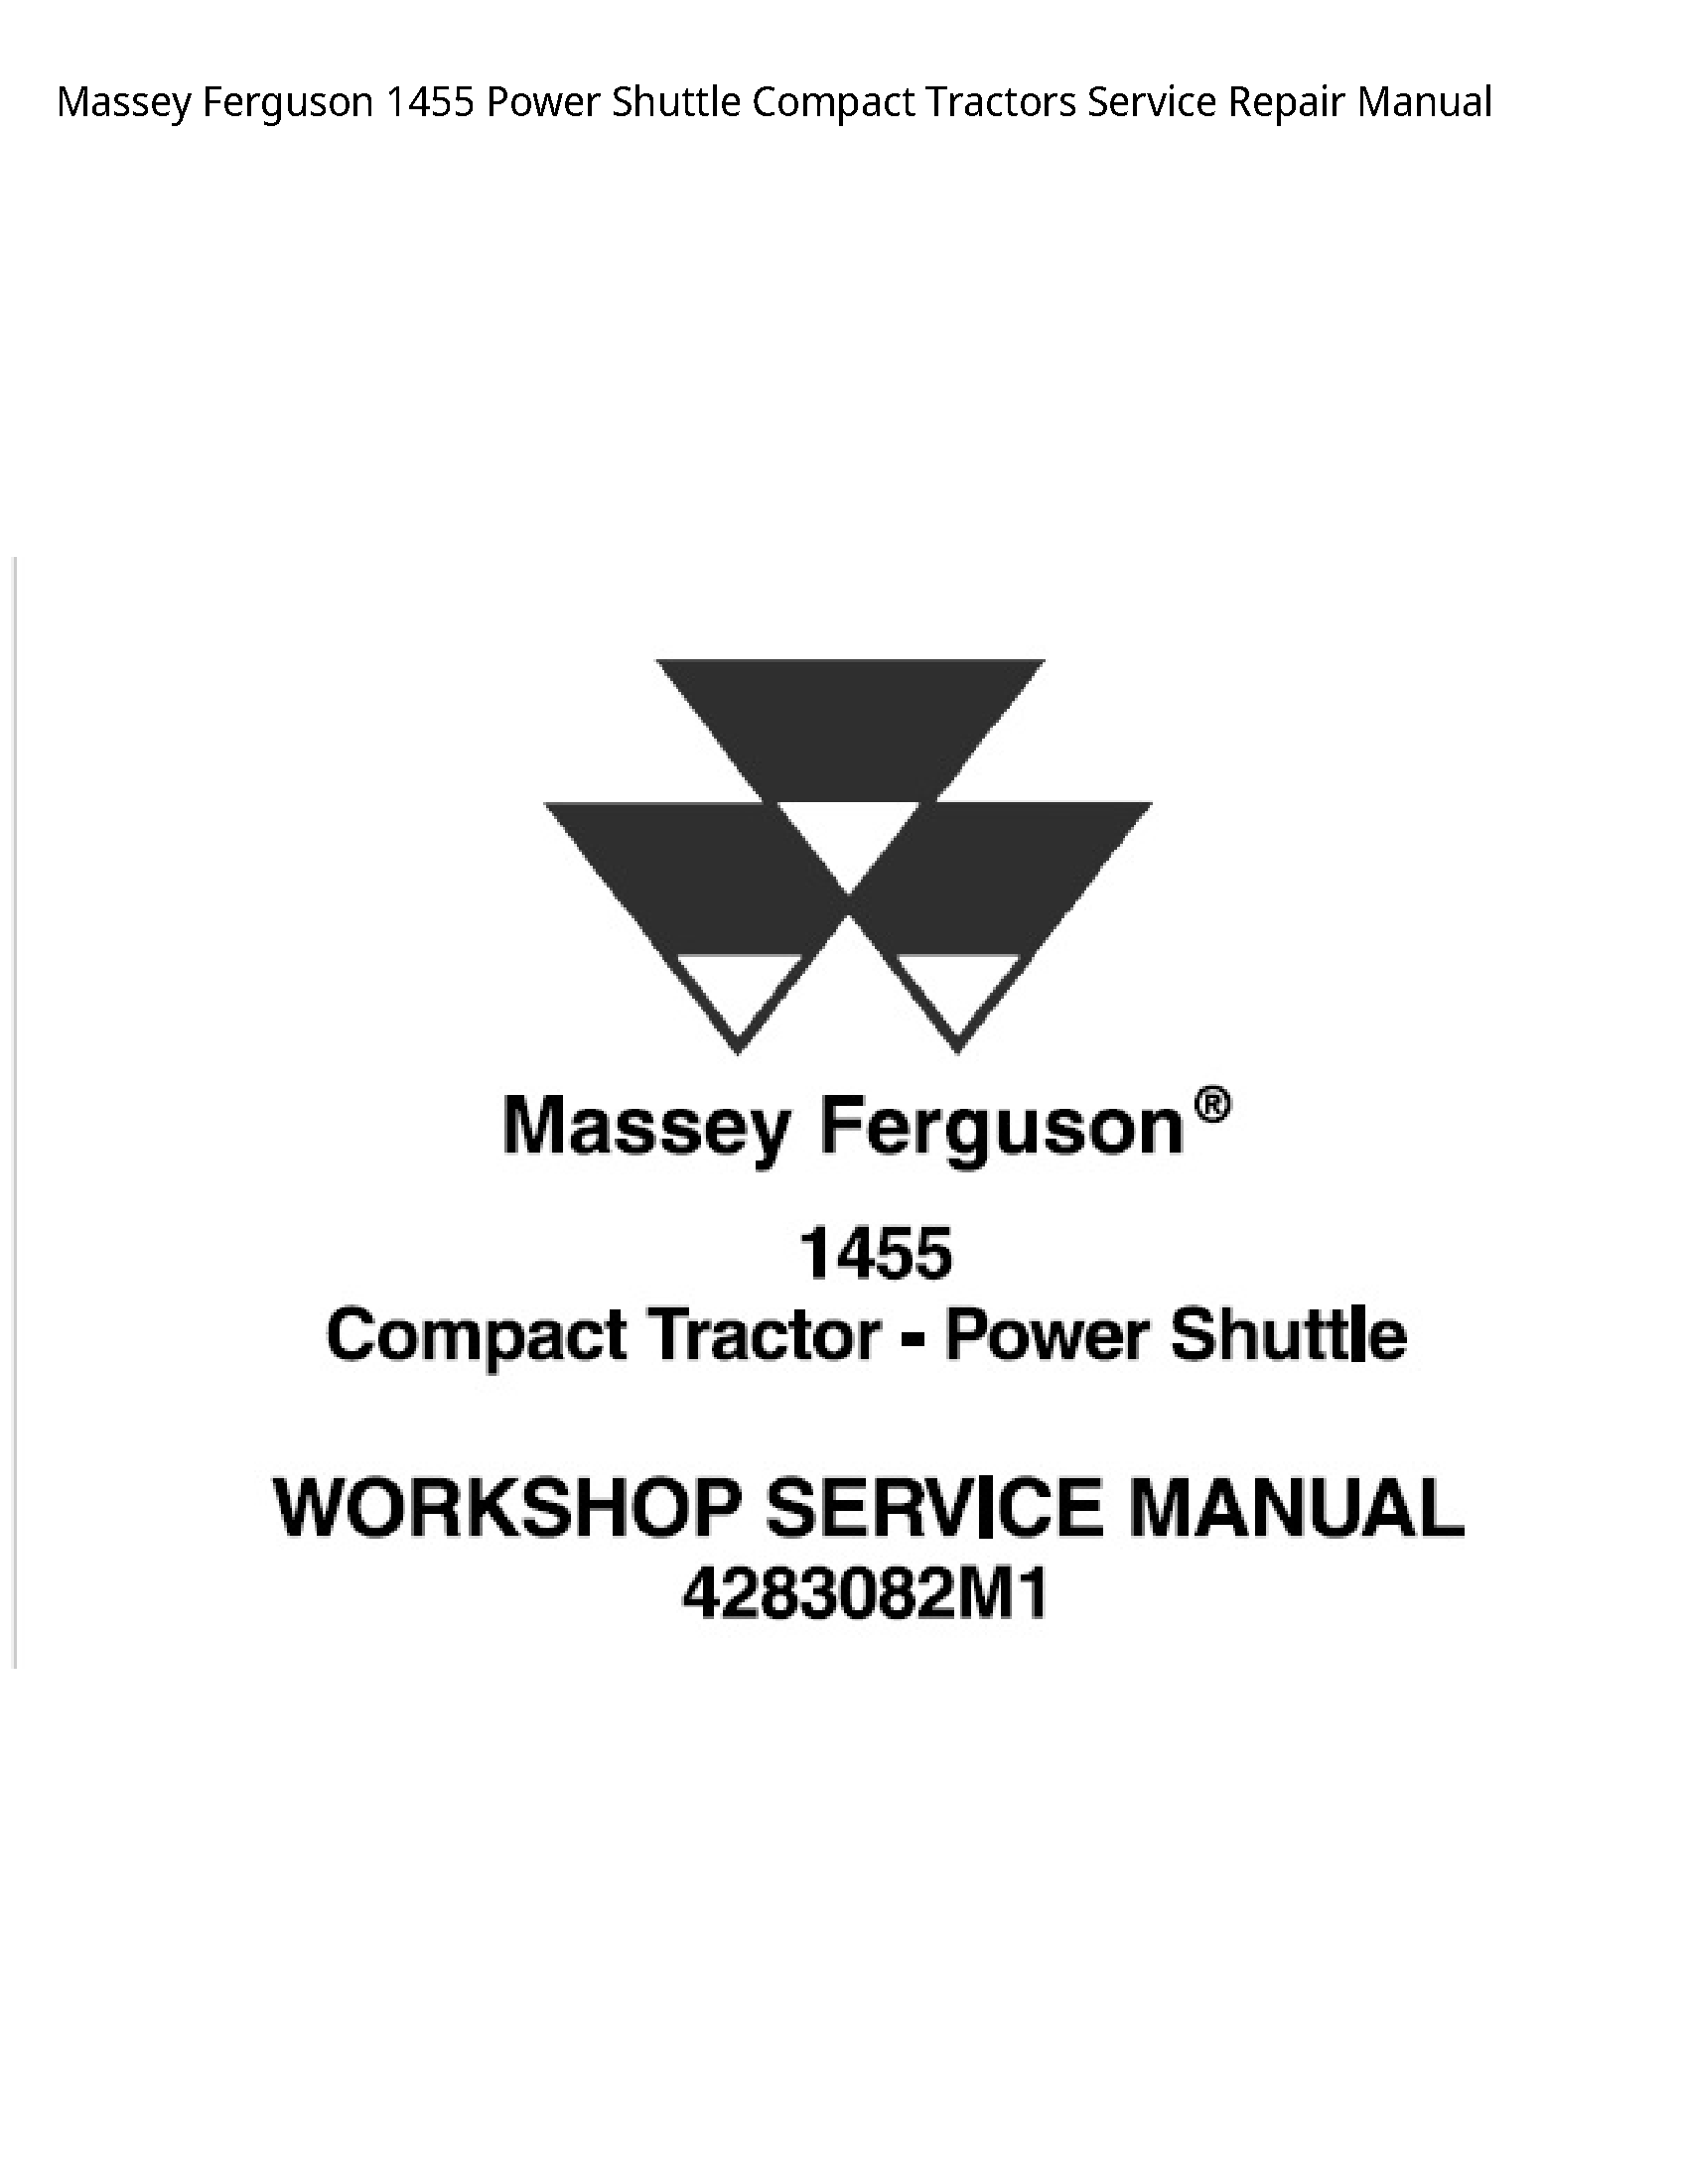 Massey Ferguson 1455 Power Shuttle Compact Tractors manual